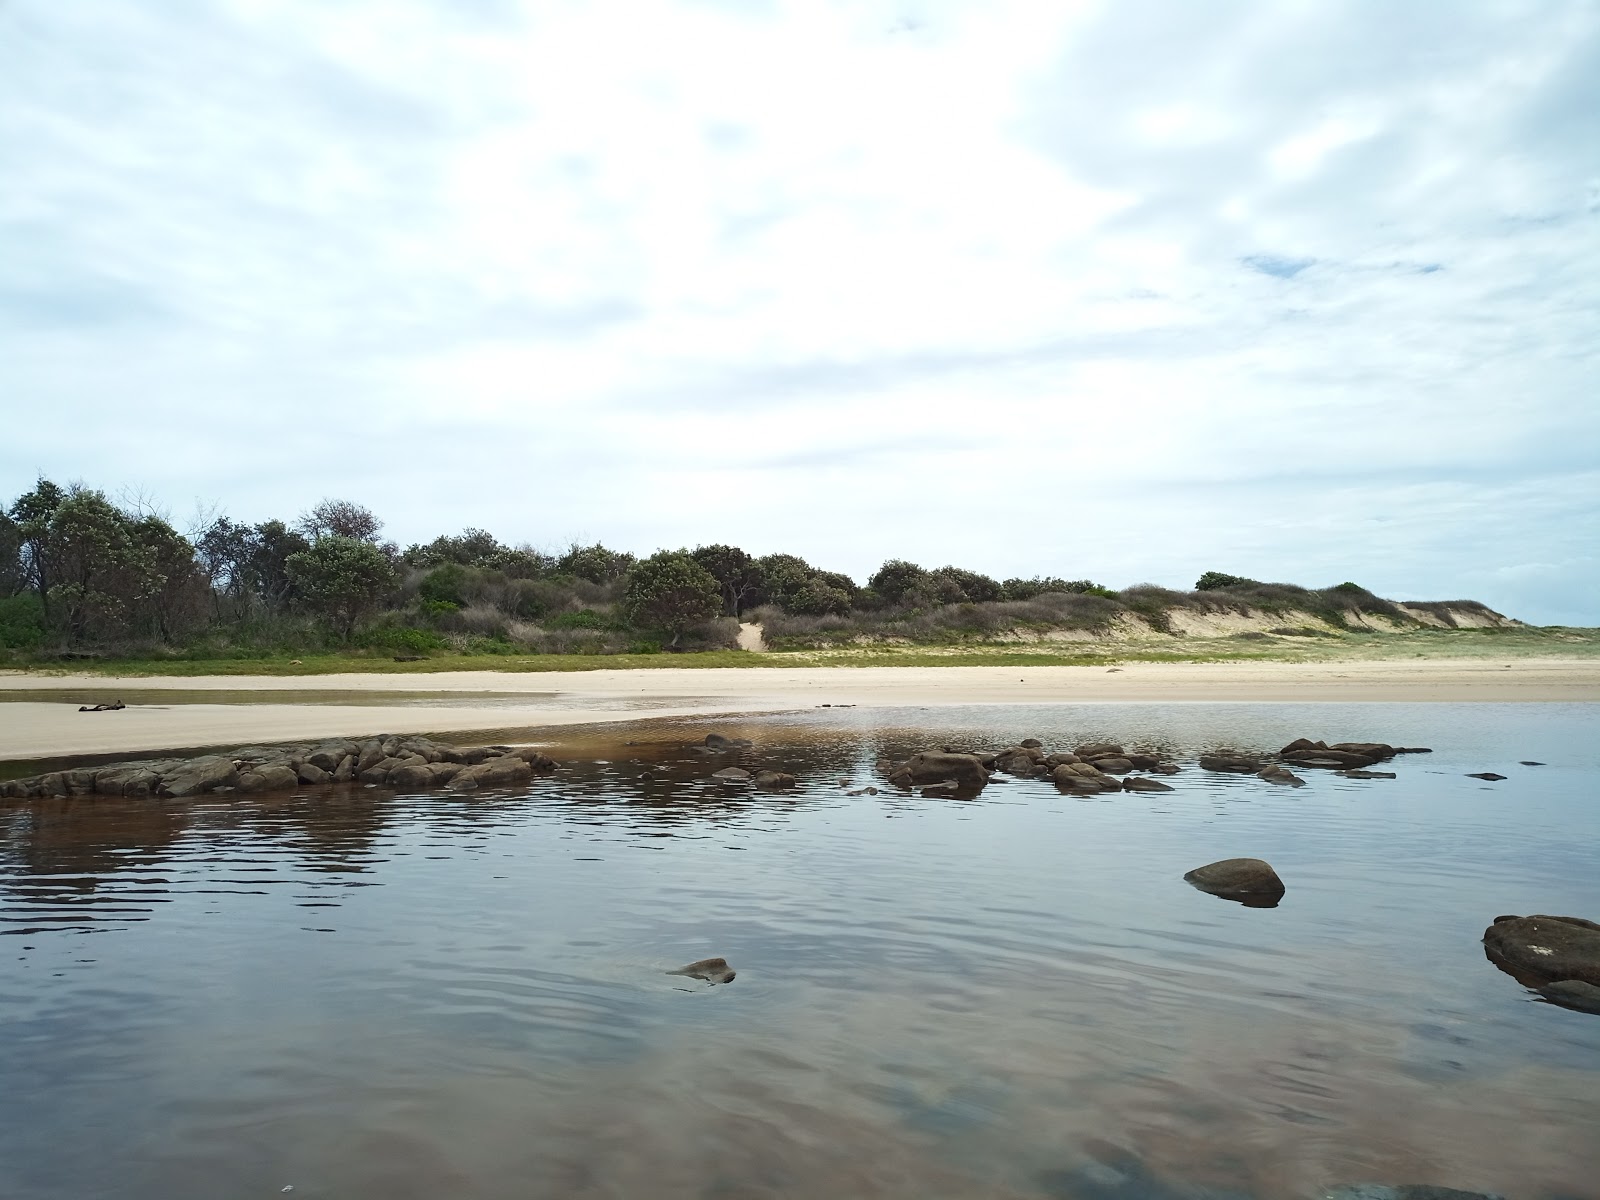 Foto di Plumbago Beach ubicato in zona naturale